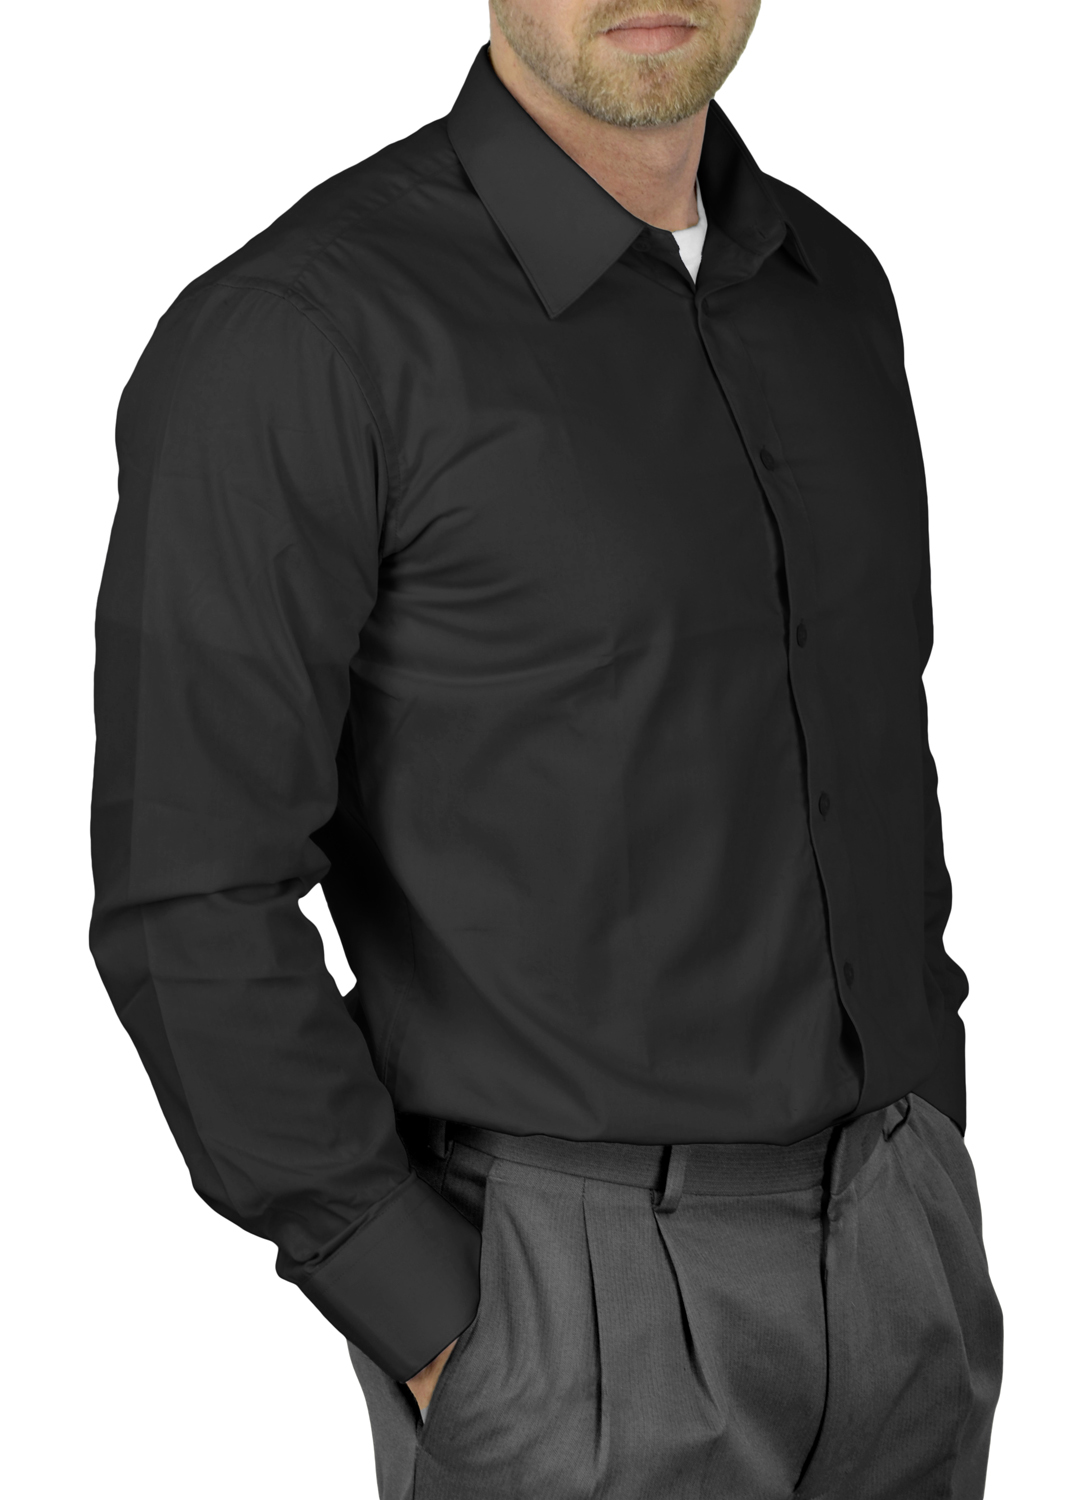 Moda Di Raza Mens Dress Shirt, French Cuff Shirt, Slim Fit, Dress Shirt for Men, Cufflink Shirts for Men - Black-Slimfit 15.5